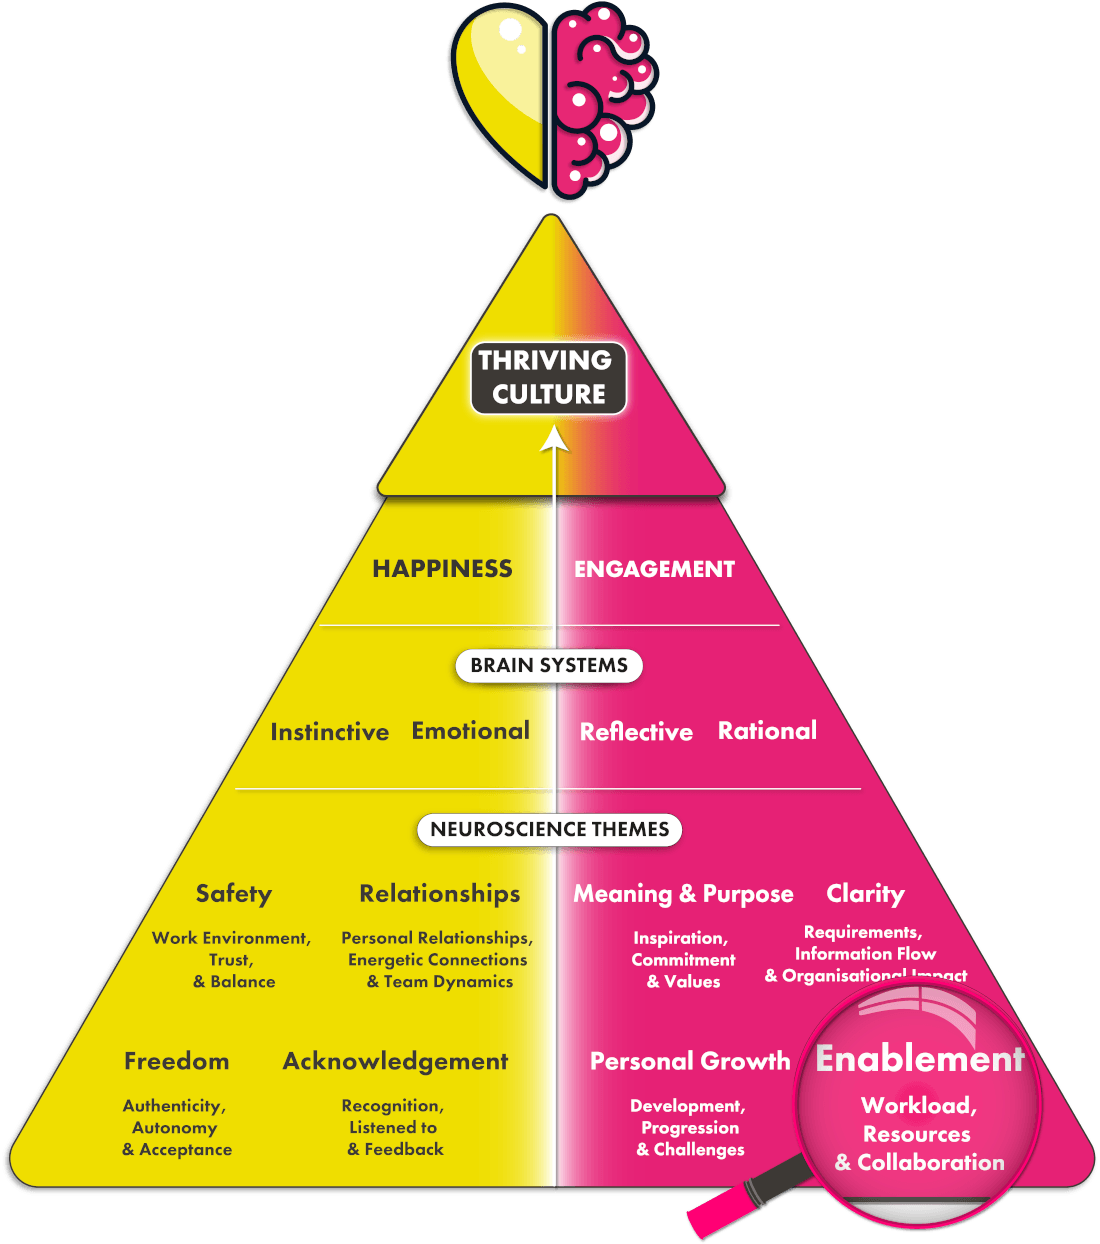 Enablement neuroscience theme on pyramid diagram